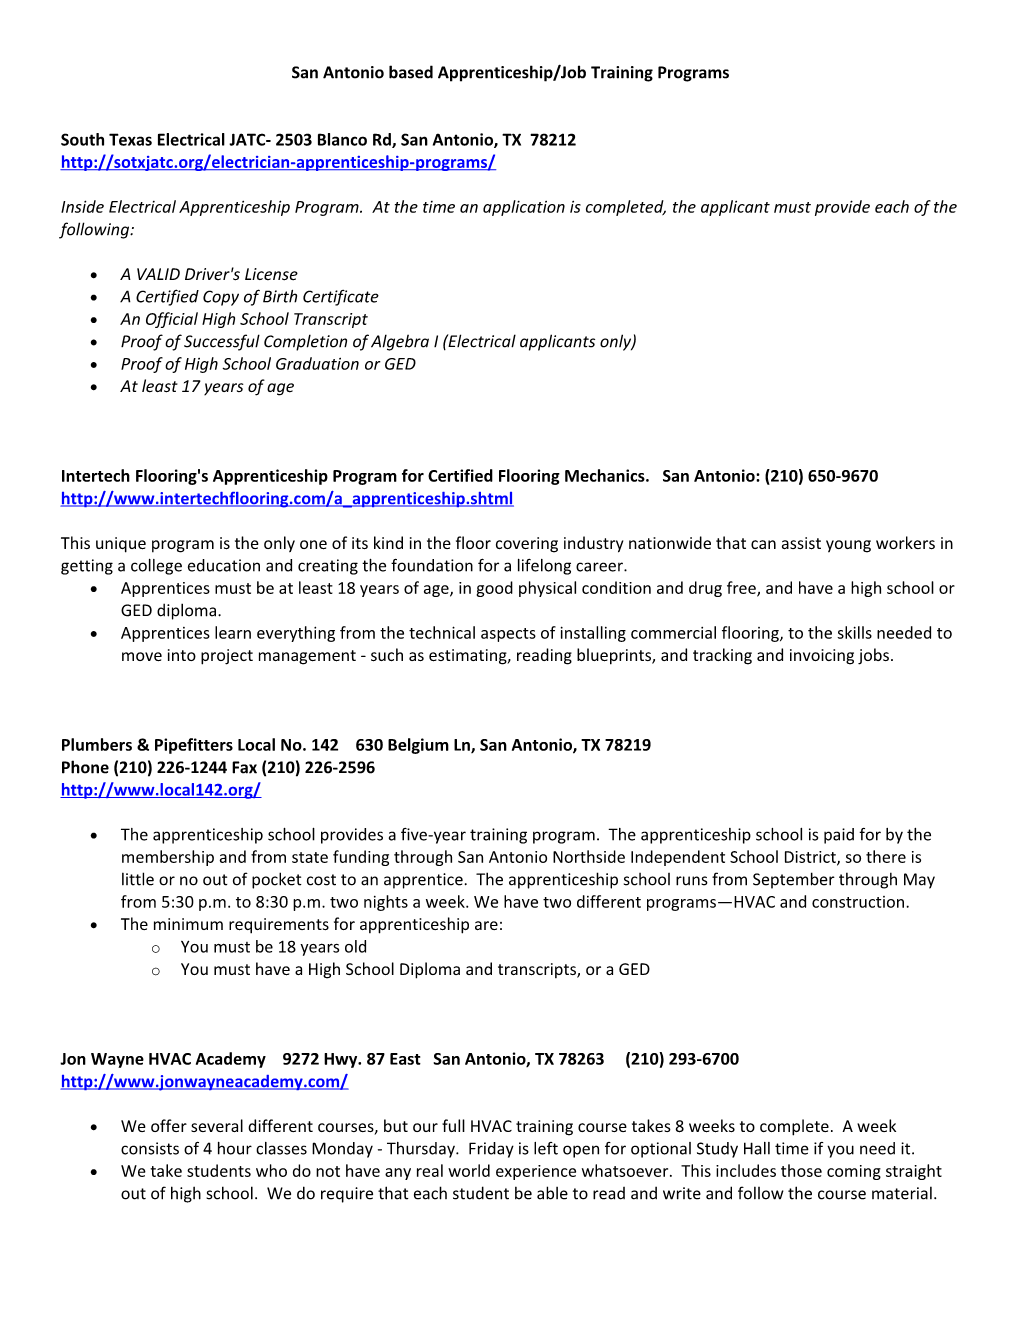 San Antonio Based Apprenticeship/Job Training Programs